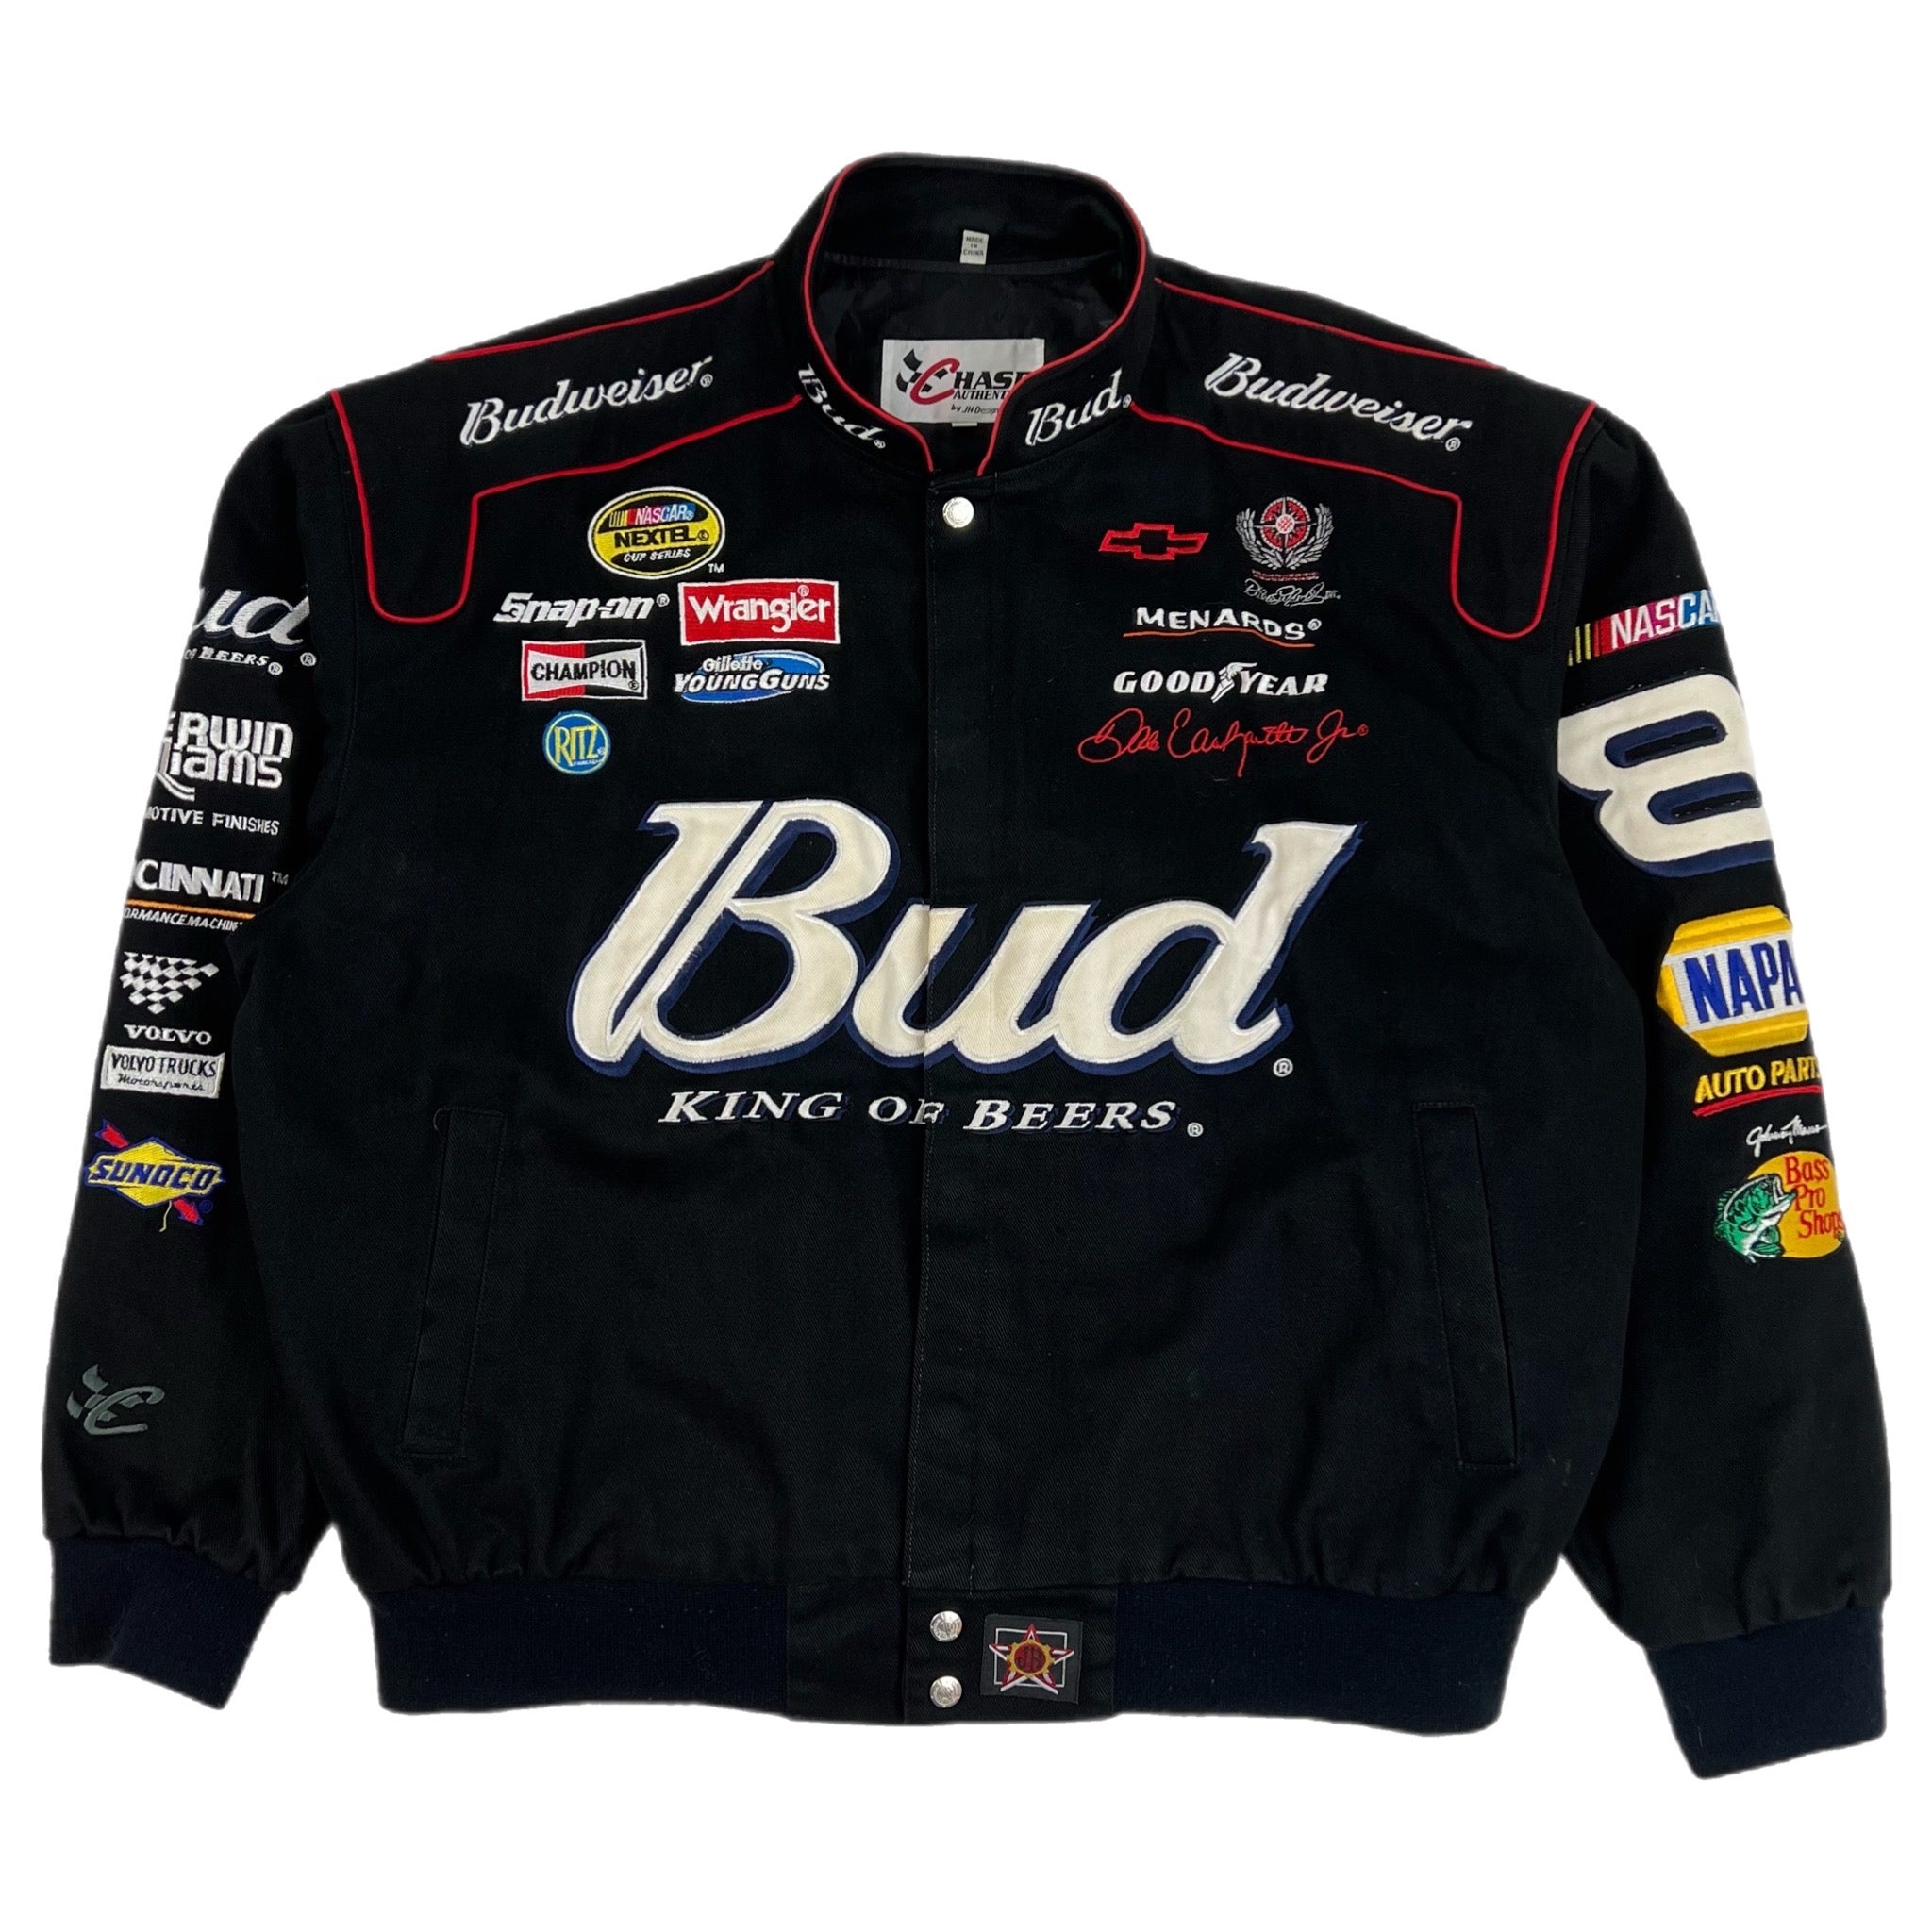 Vintage NASCAR Budweiser Dale Earnhardt JR King Of Beers Racing Jacket